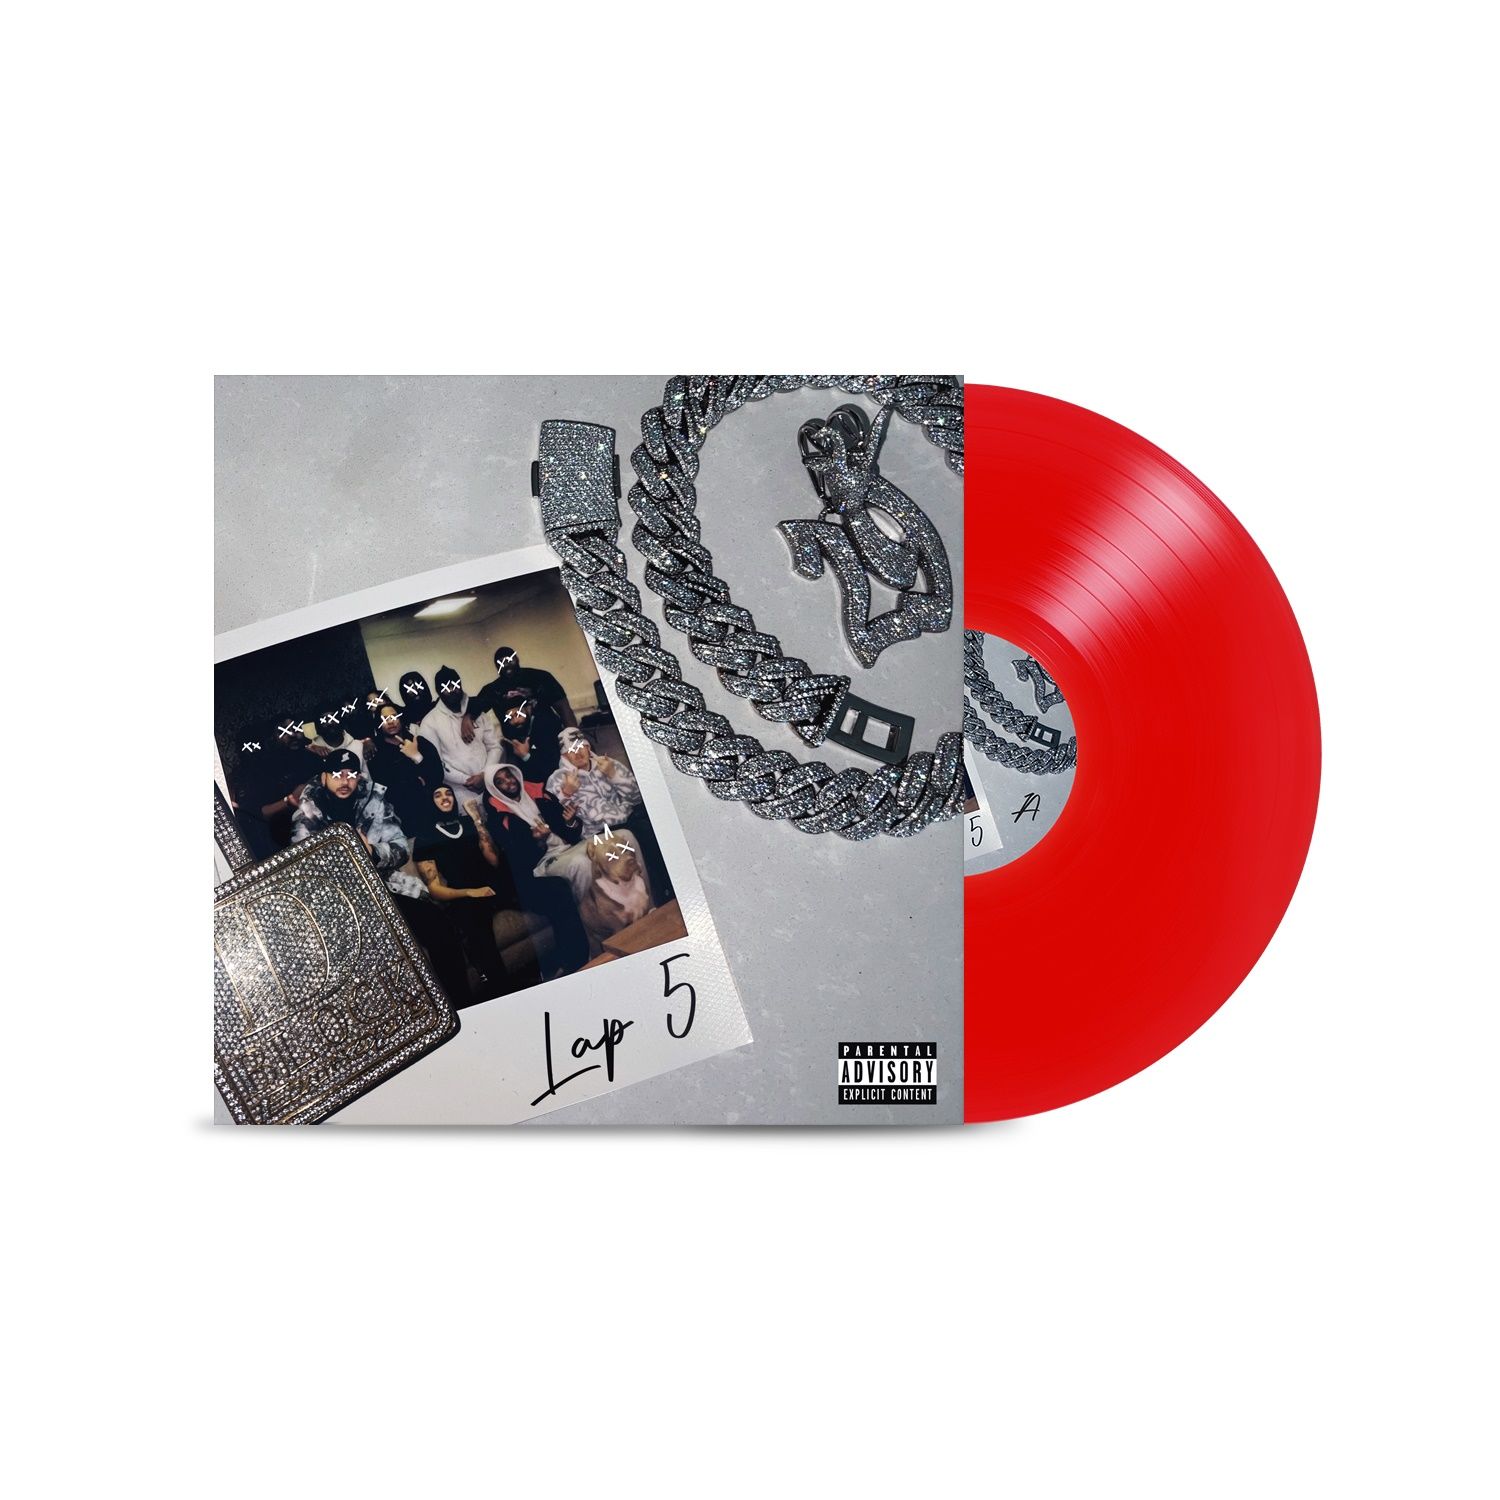 D-Block Europe - Lap 5: Limited Red Vinyl 2LP